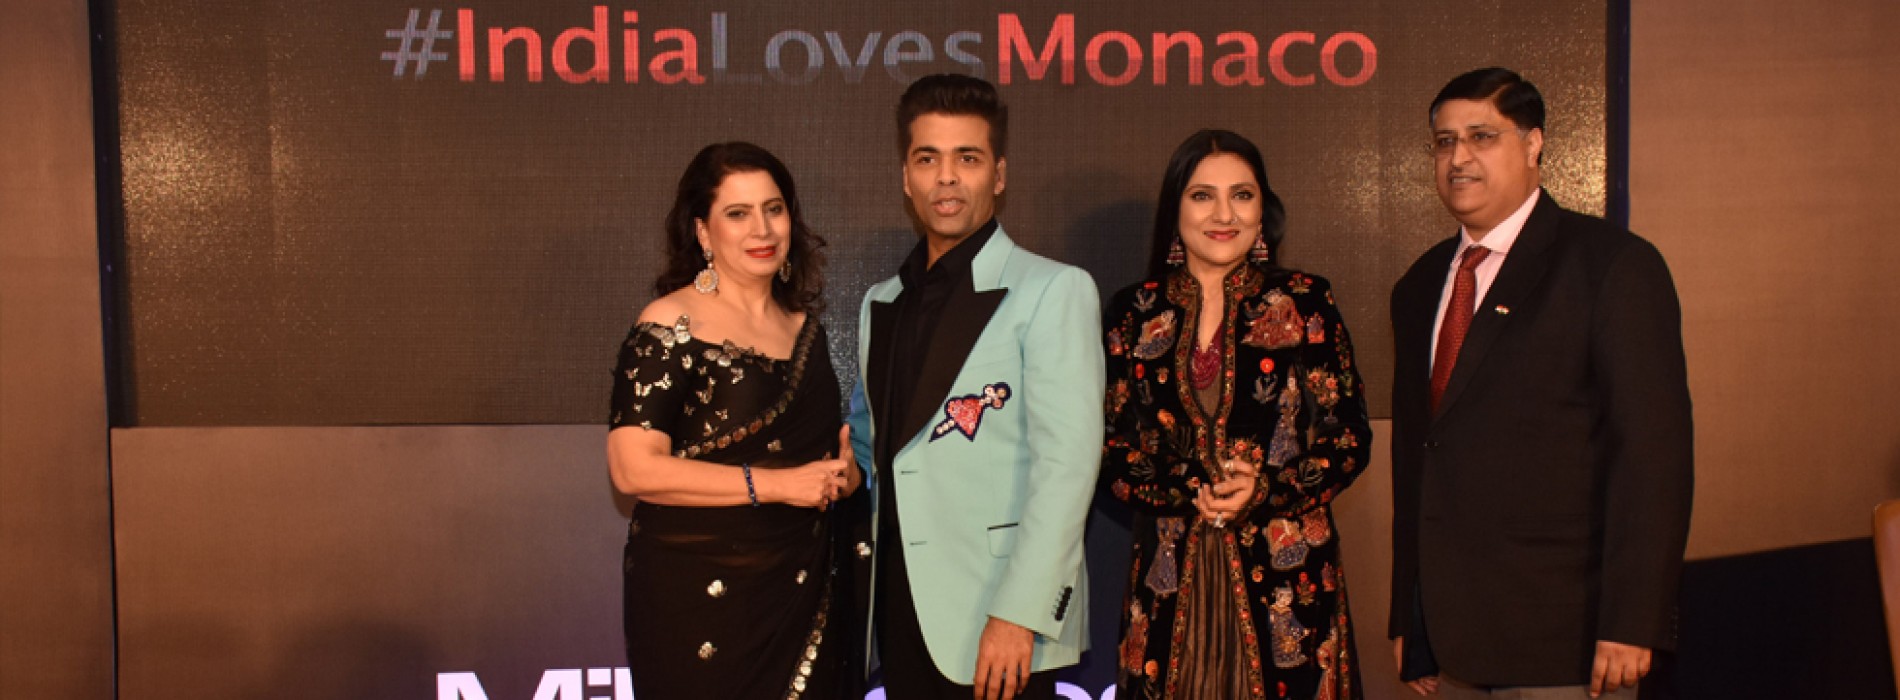 Visit Monaco celebrates New Year with Karan Johar and Millionaireasia India